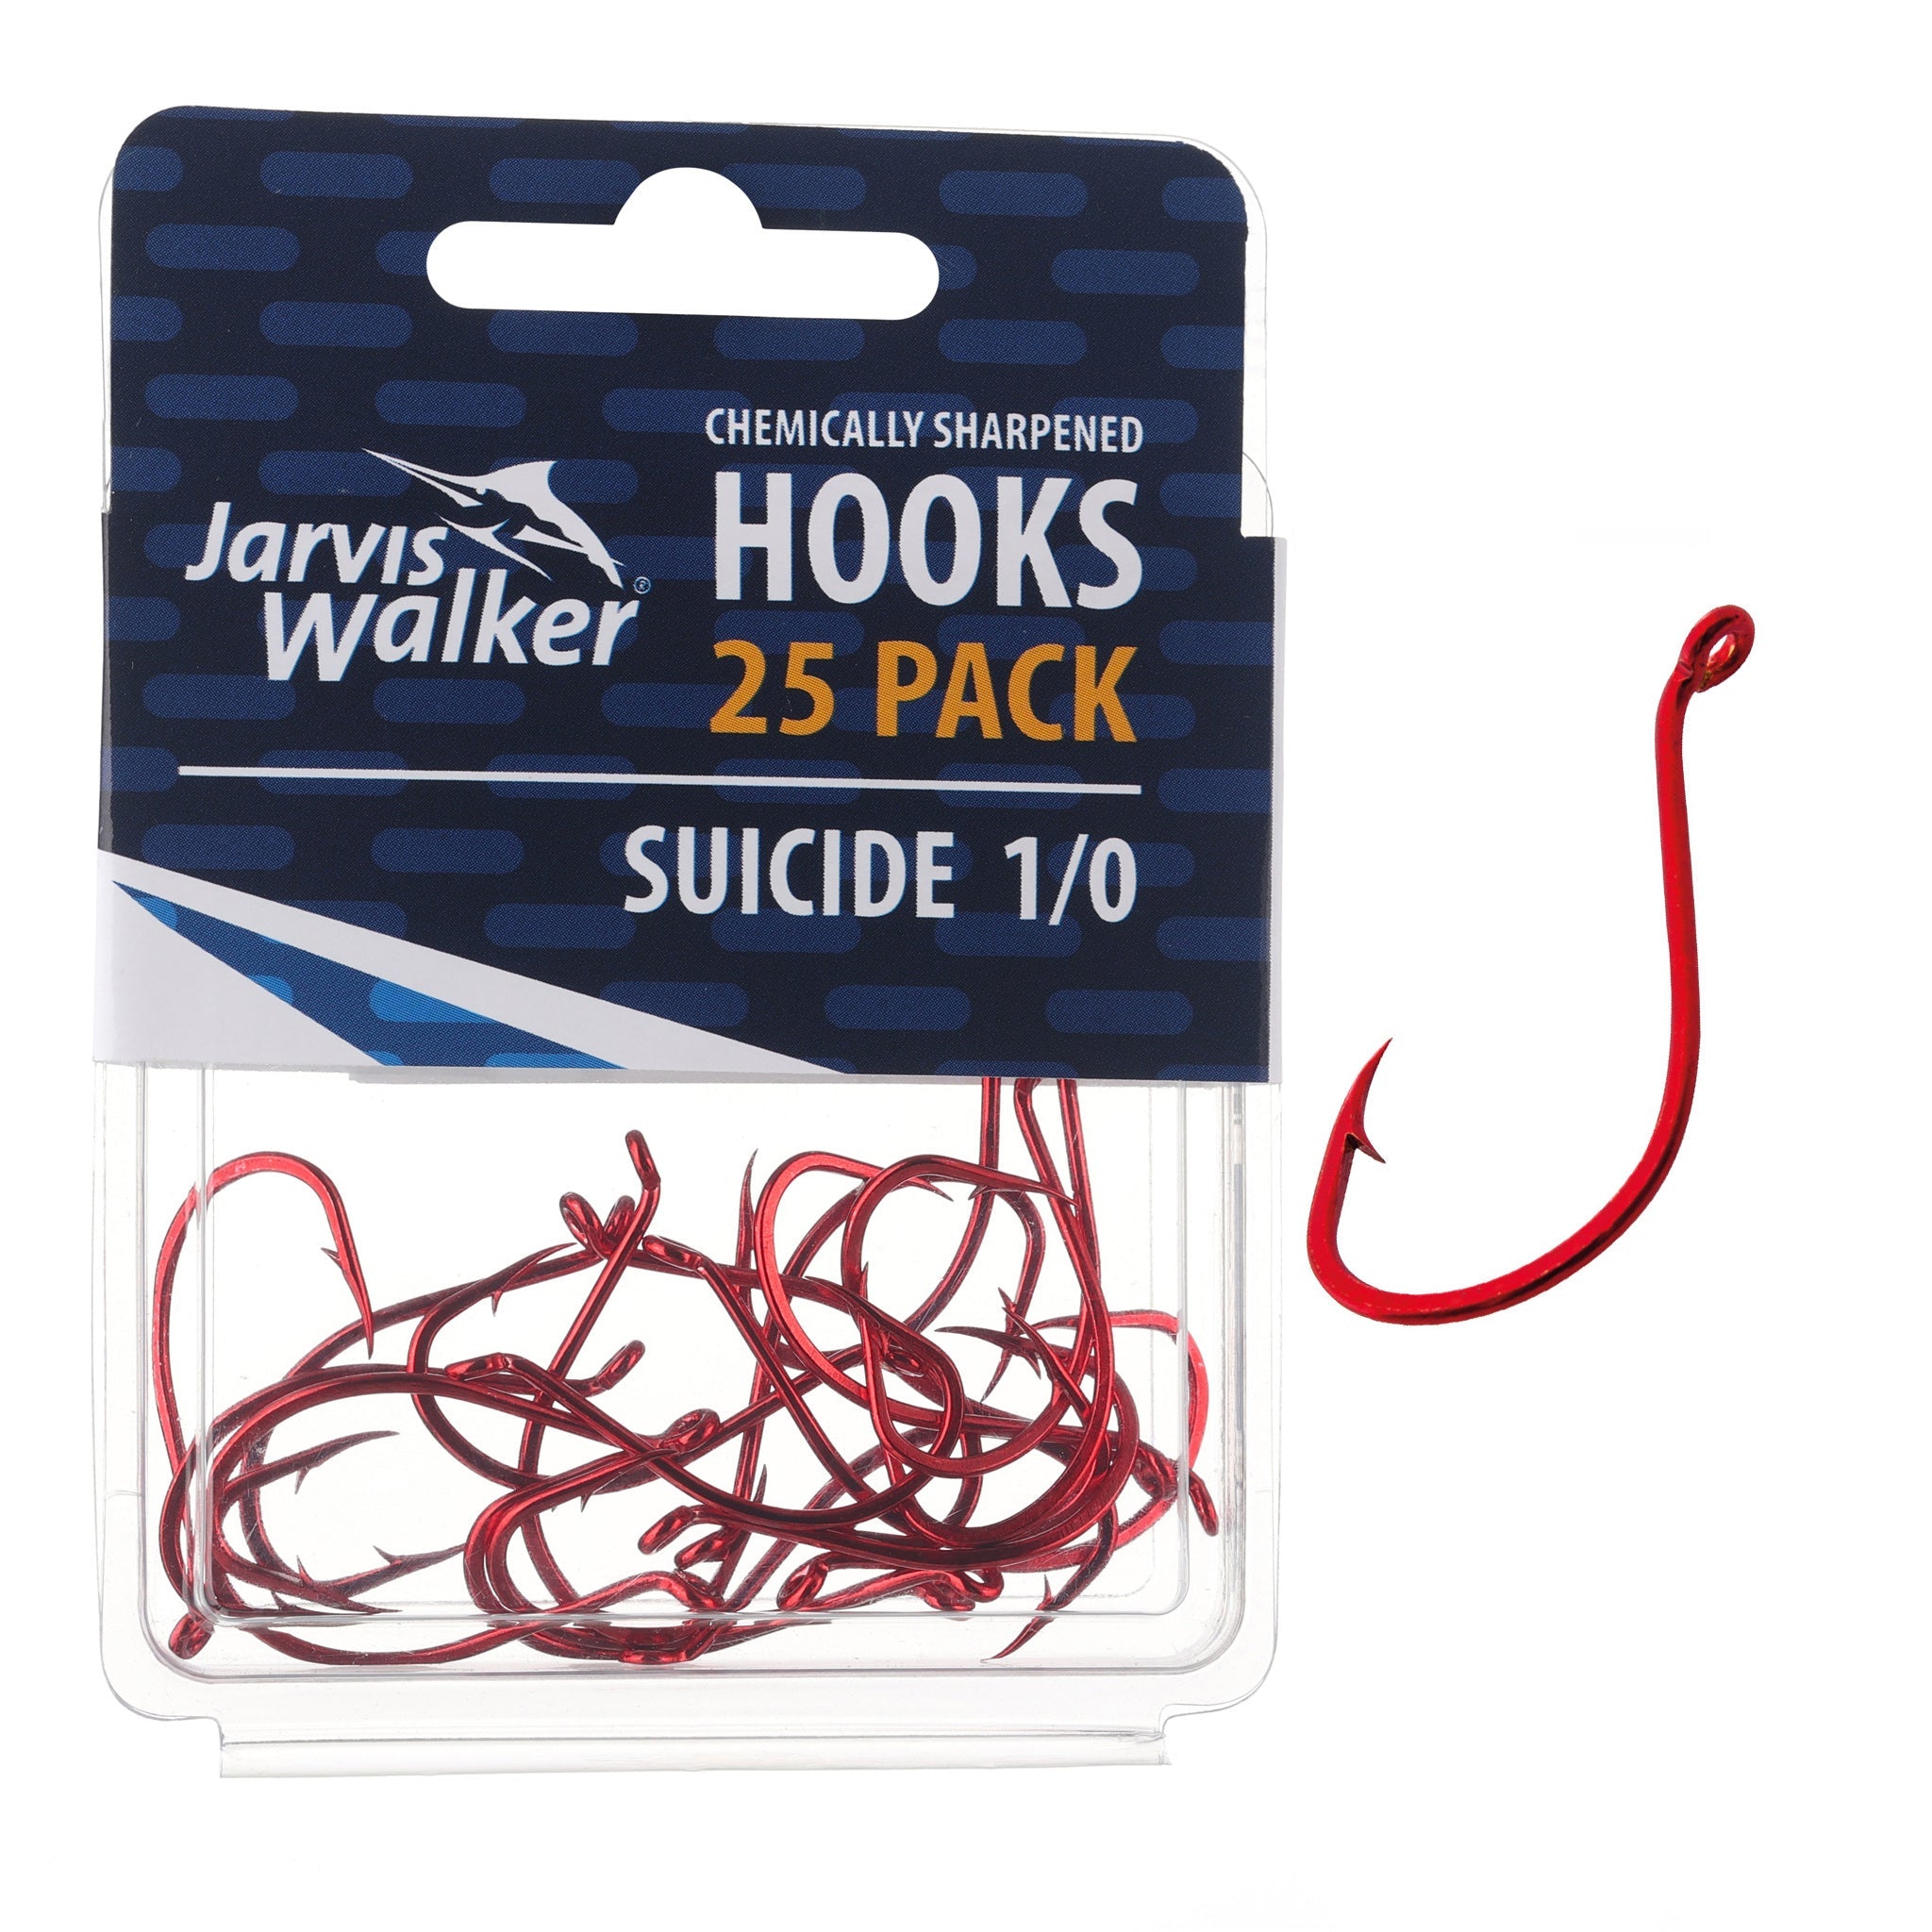 Jarvis Walker Chemically Sharpened Suicide Hooks - 25 Packs